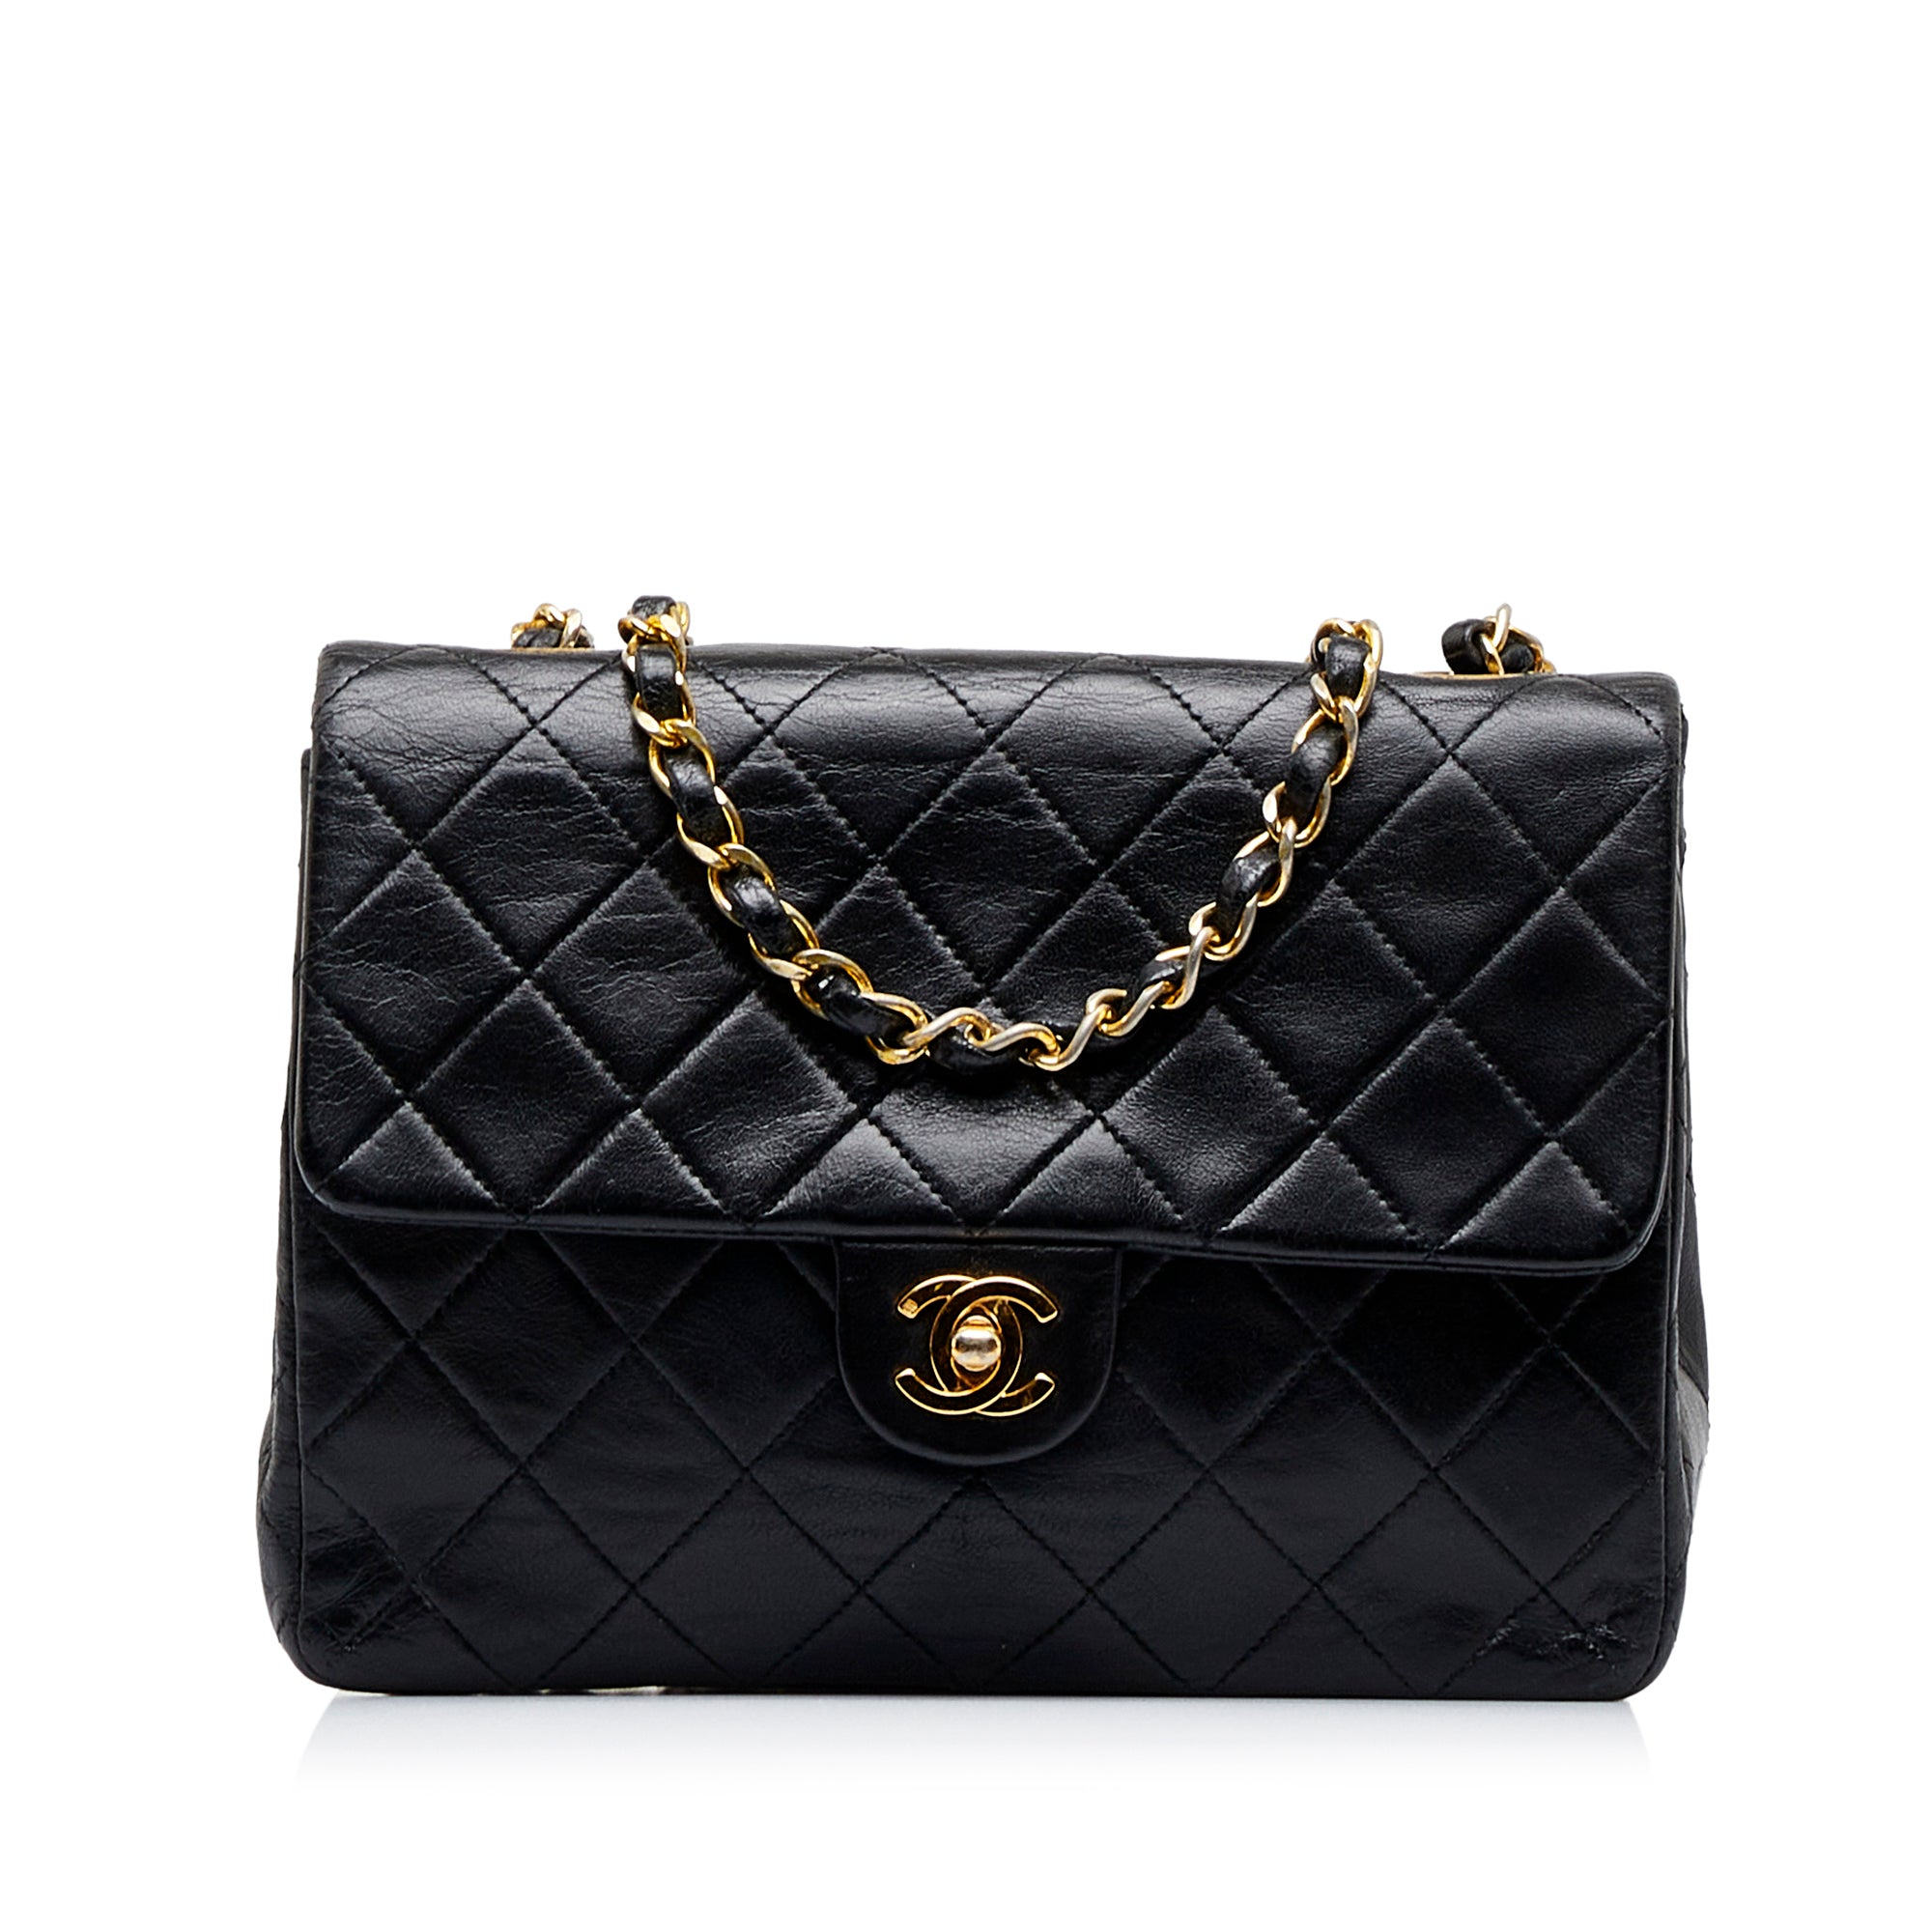 Louis Vuitton - Authenticated Twist Belt Wallet on Chain Handbag - Leather Black Plain for Women, Very Good Condition